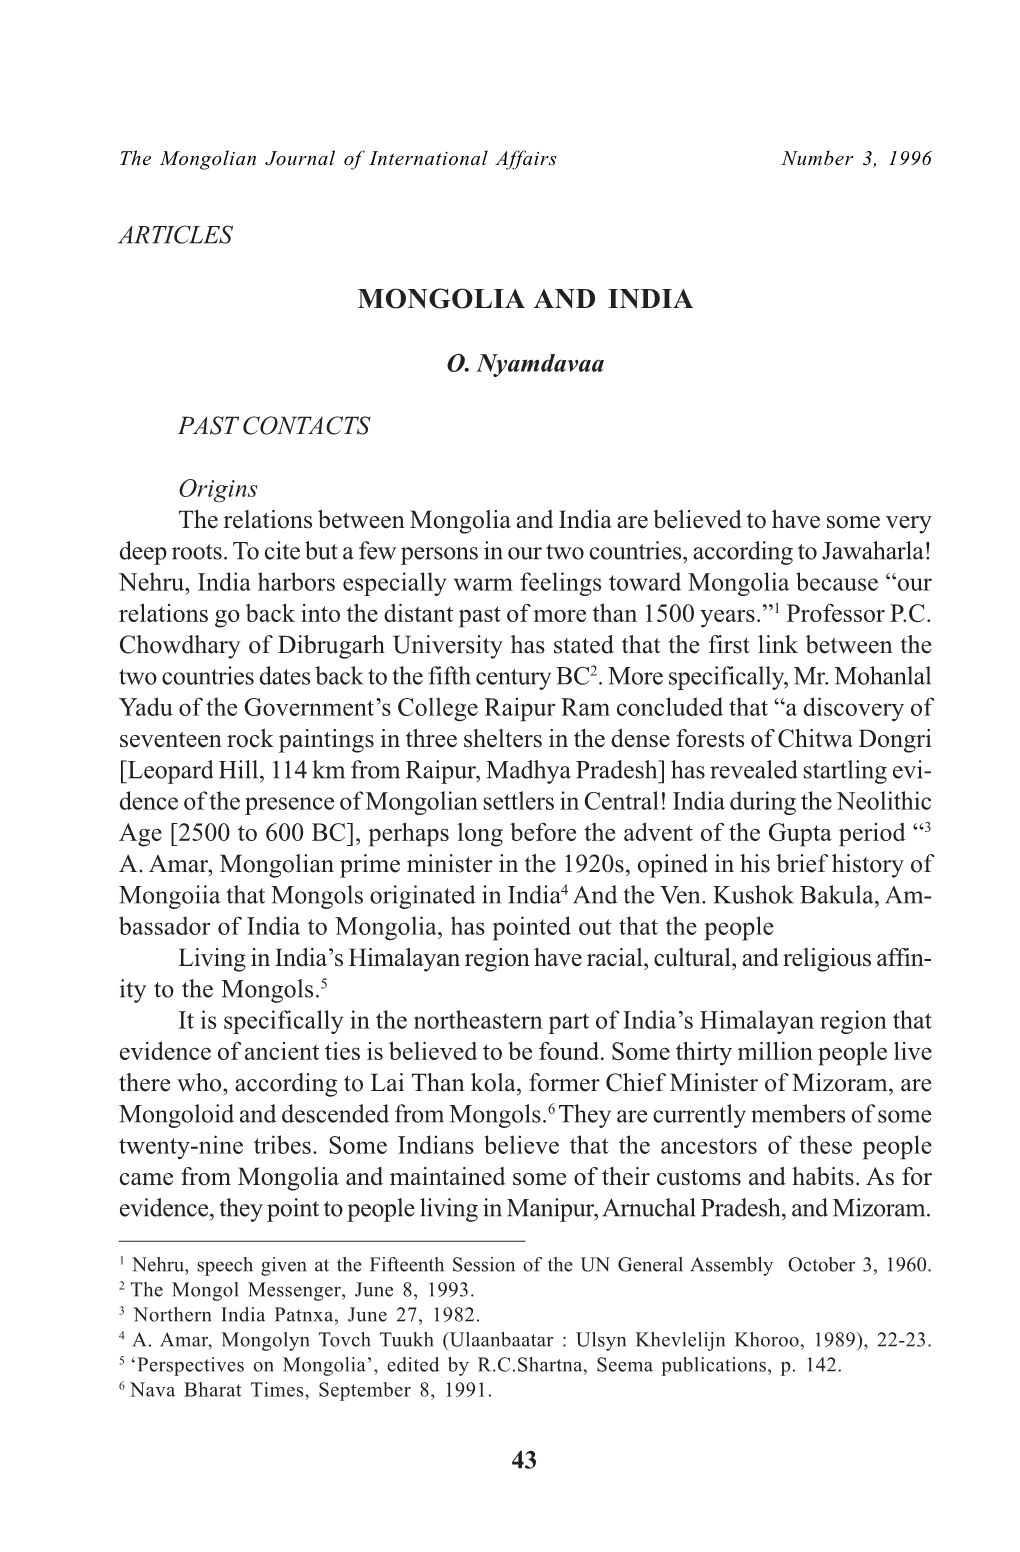 Mongolia and India